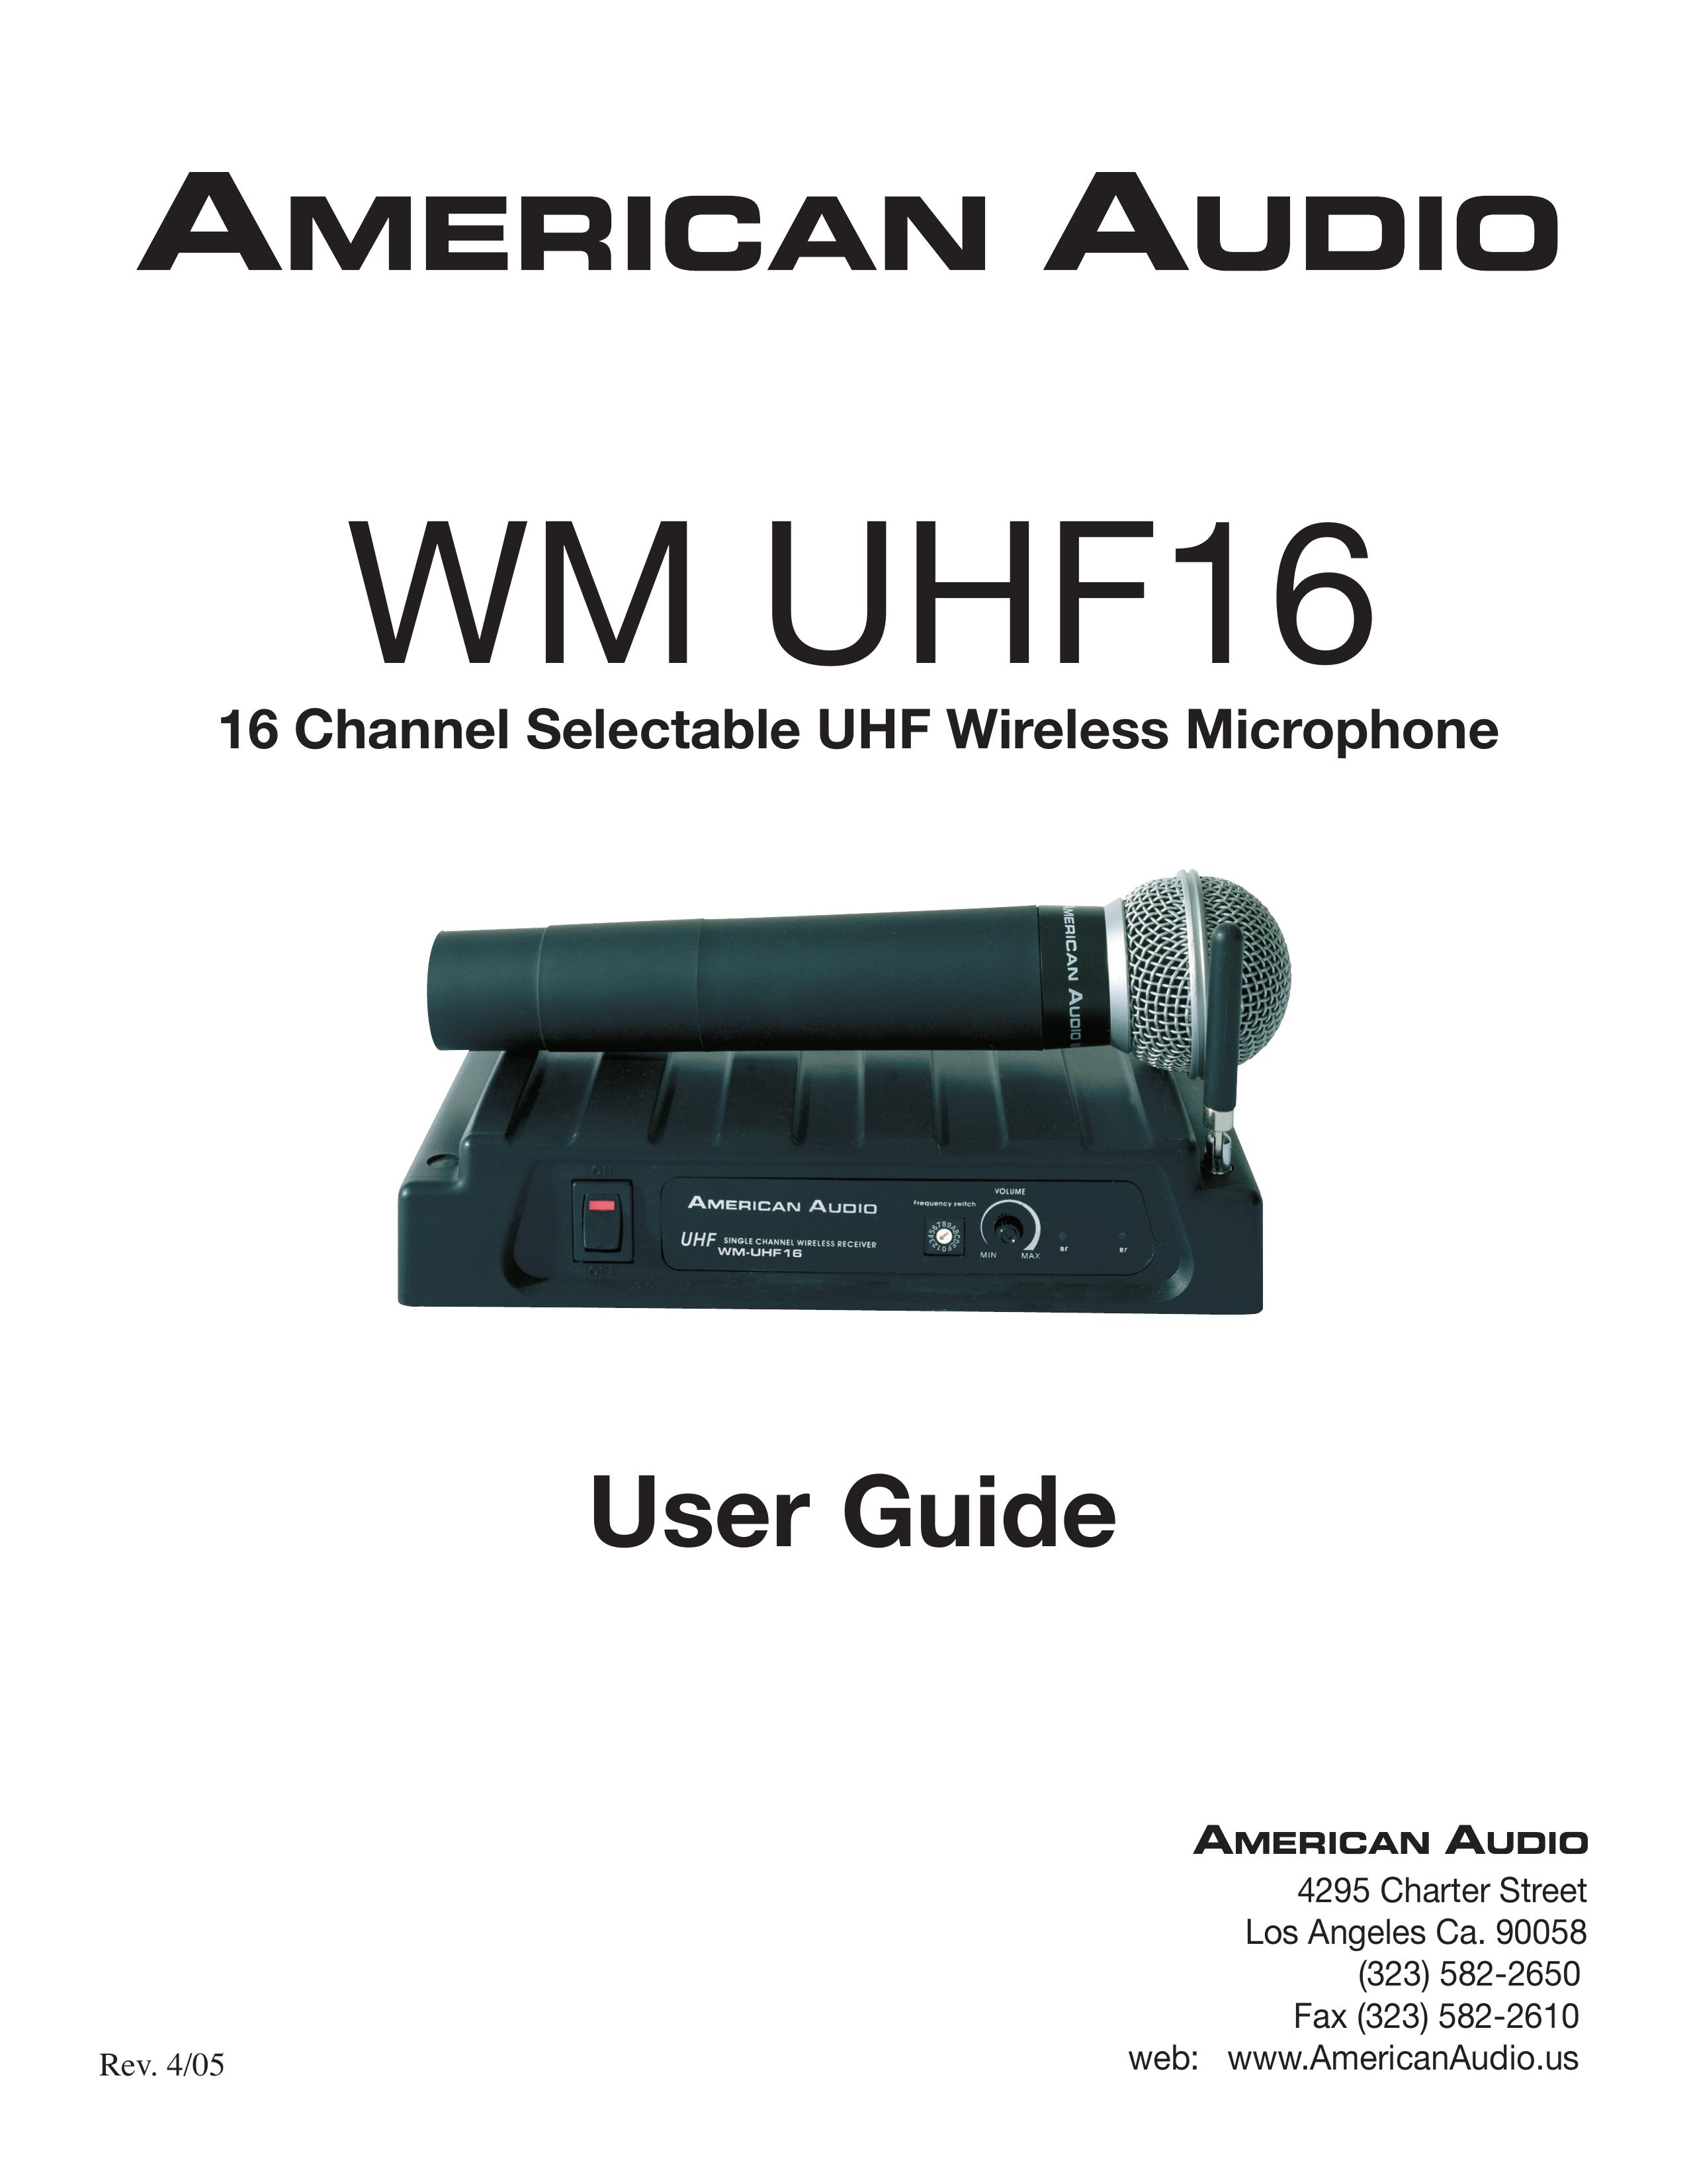 American Audio WM-UHF16 Microphone User Manual